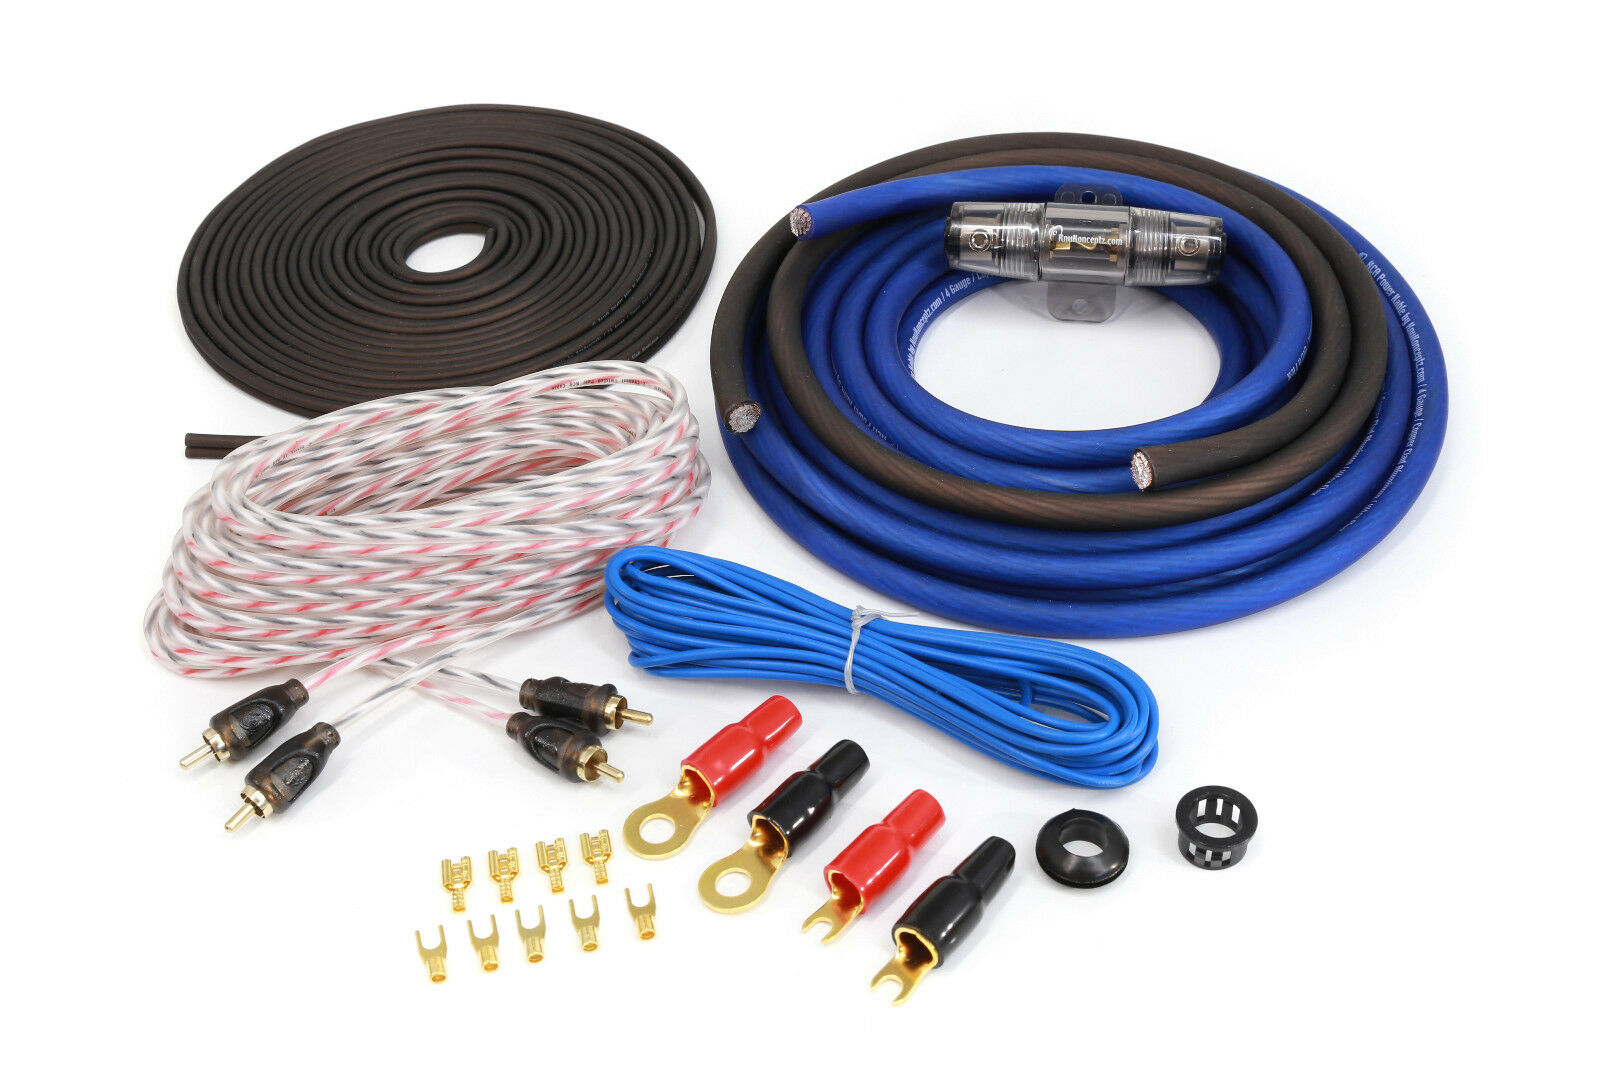 Knukonceptz Kca 4 Gauge True 4 Gauge Amp Kit Installation Wiring Kit